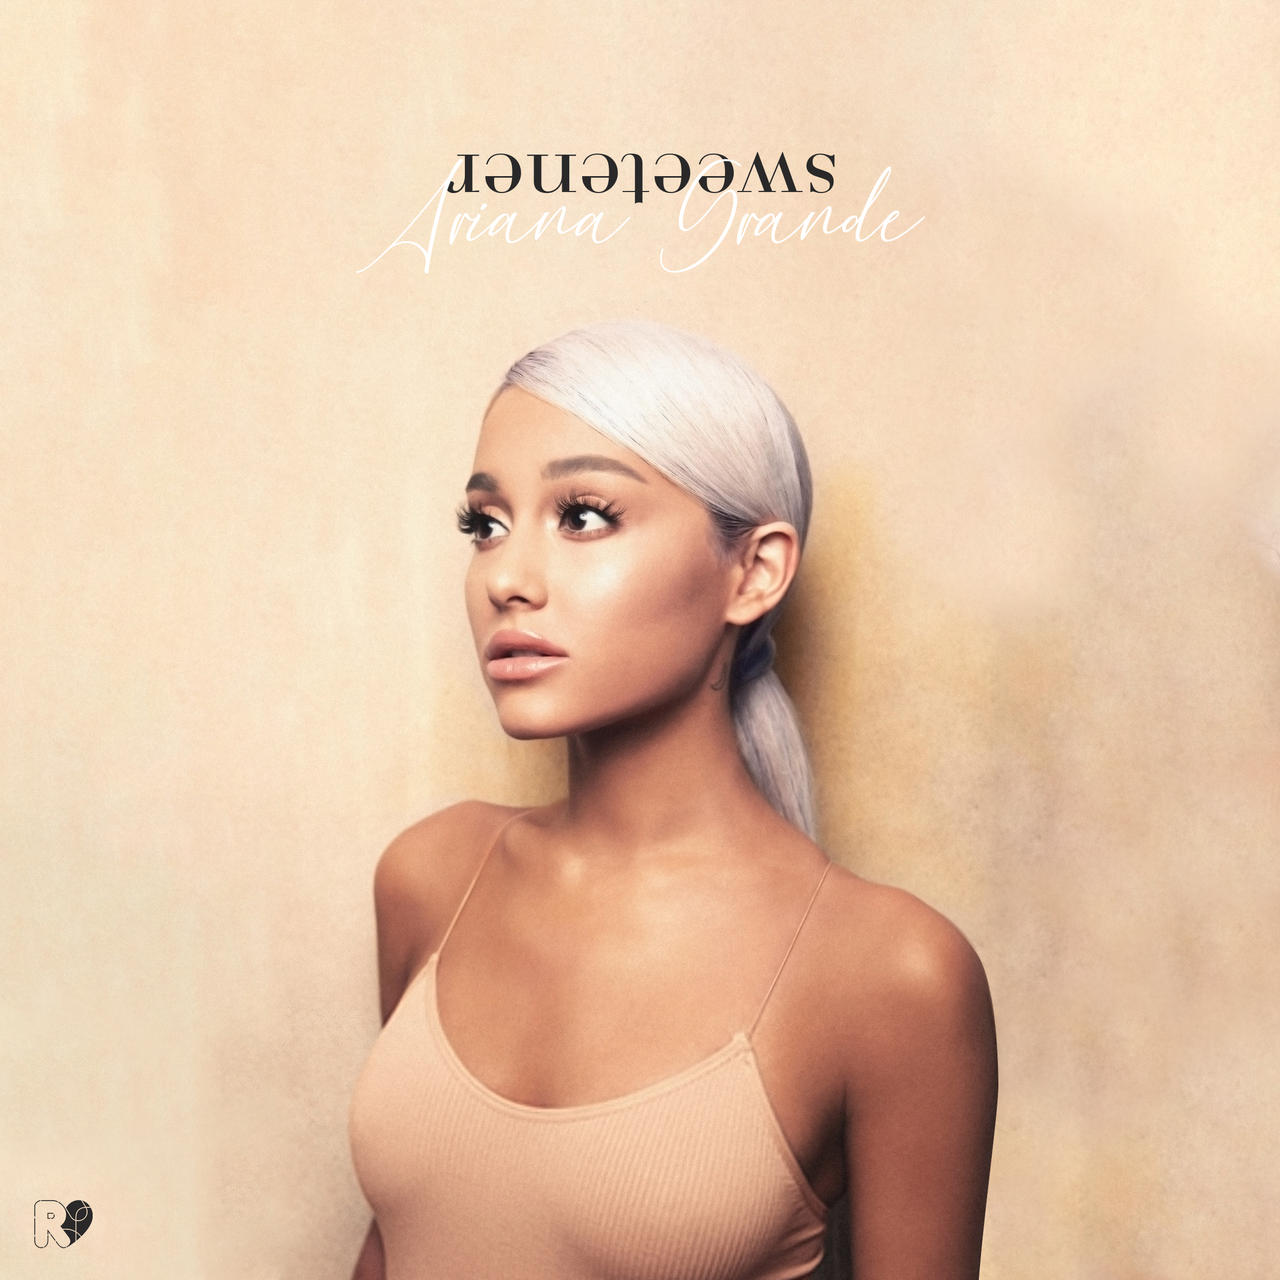 Ariana Grande · Sweetener (CD) [Deluxe edition] (2018)